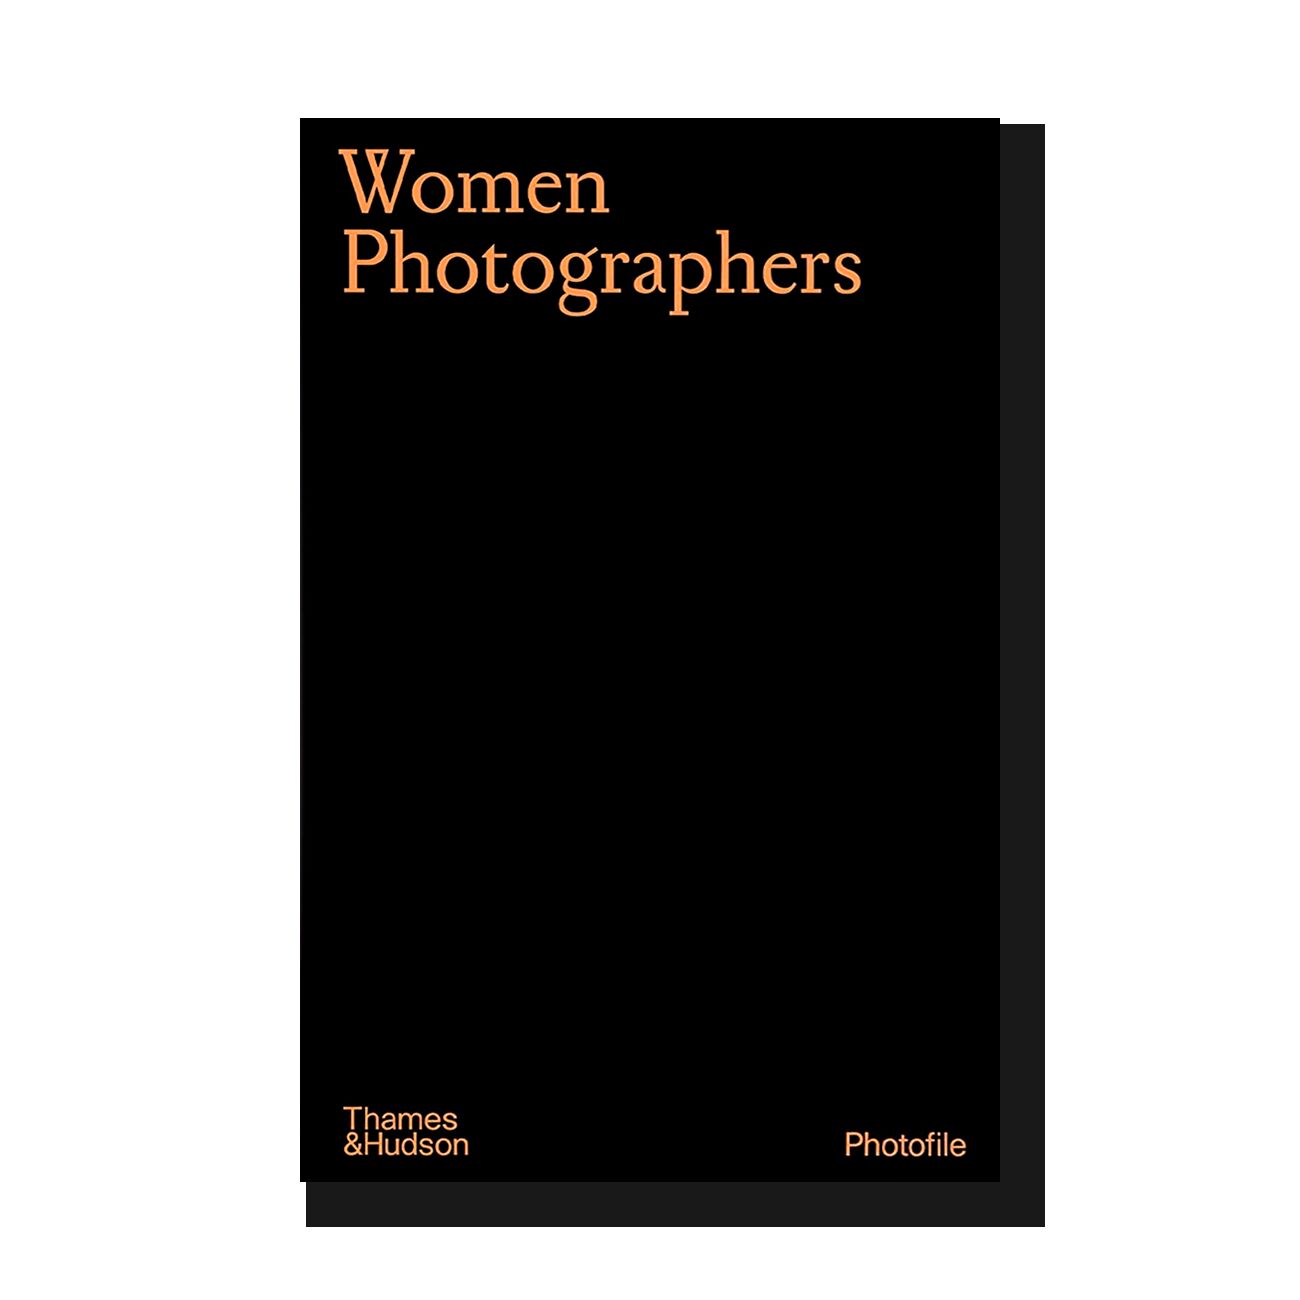 Women Photographers (Slipcased set)